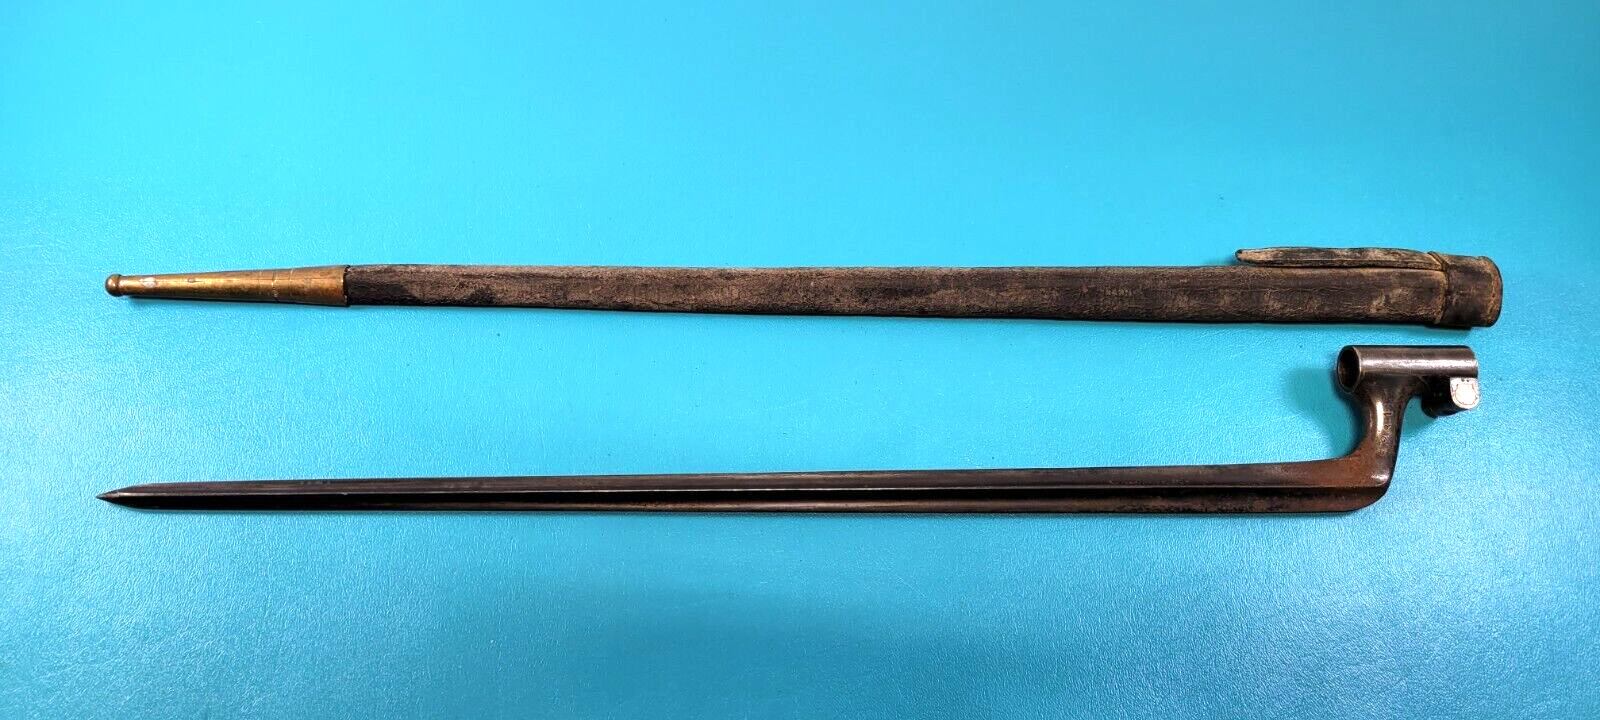 Scarce Swedish Model 1867 - 1889 Remington Rifle Bayonet Coil Spring Press Stud